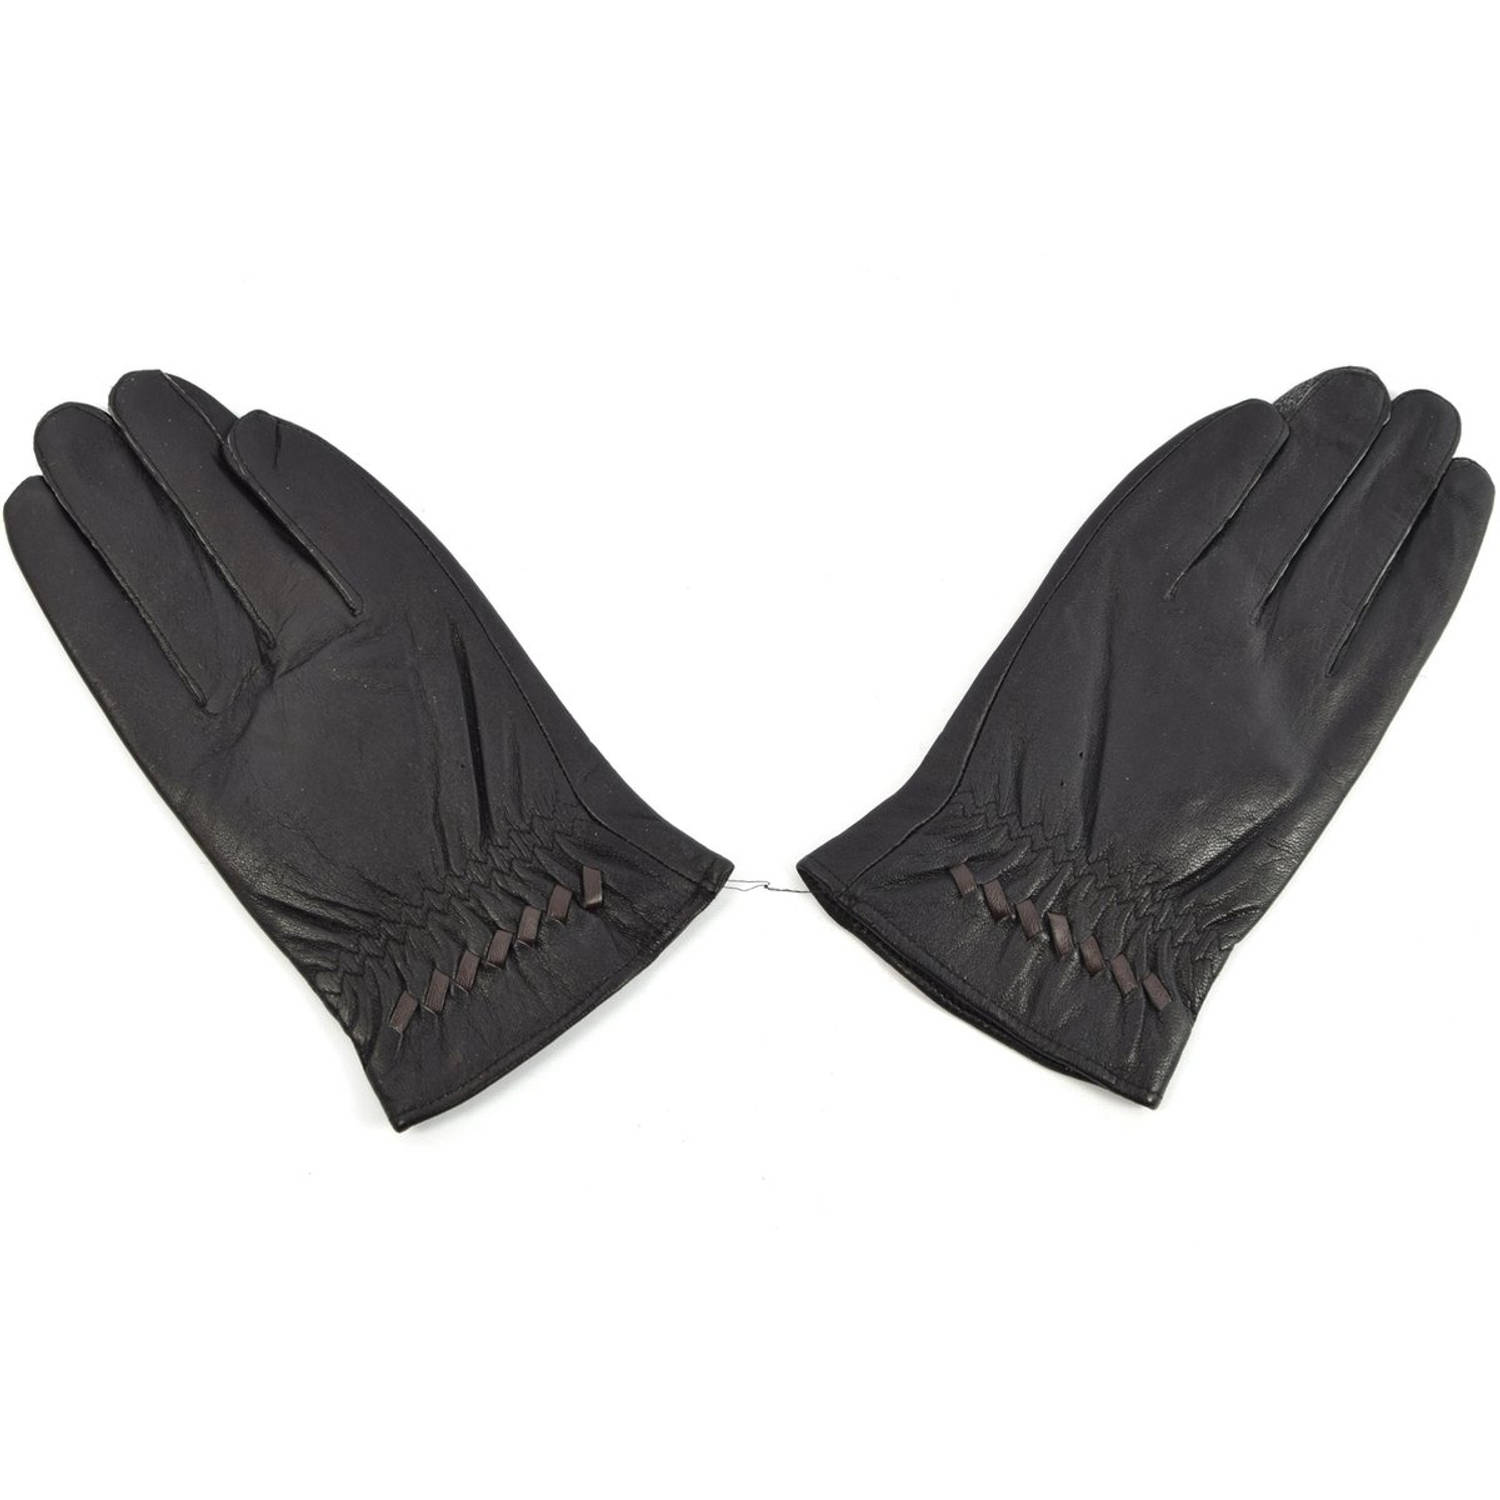 Handschoenen - Leren Handschoenen heren - Leren Handschoenen Dames - Stijlvolle handschoenen - handschoenen winter -